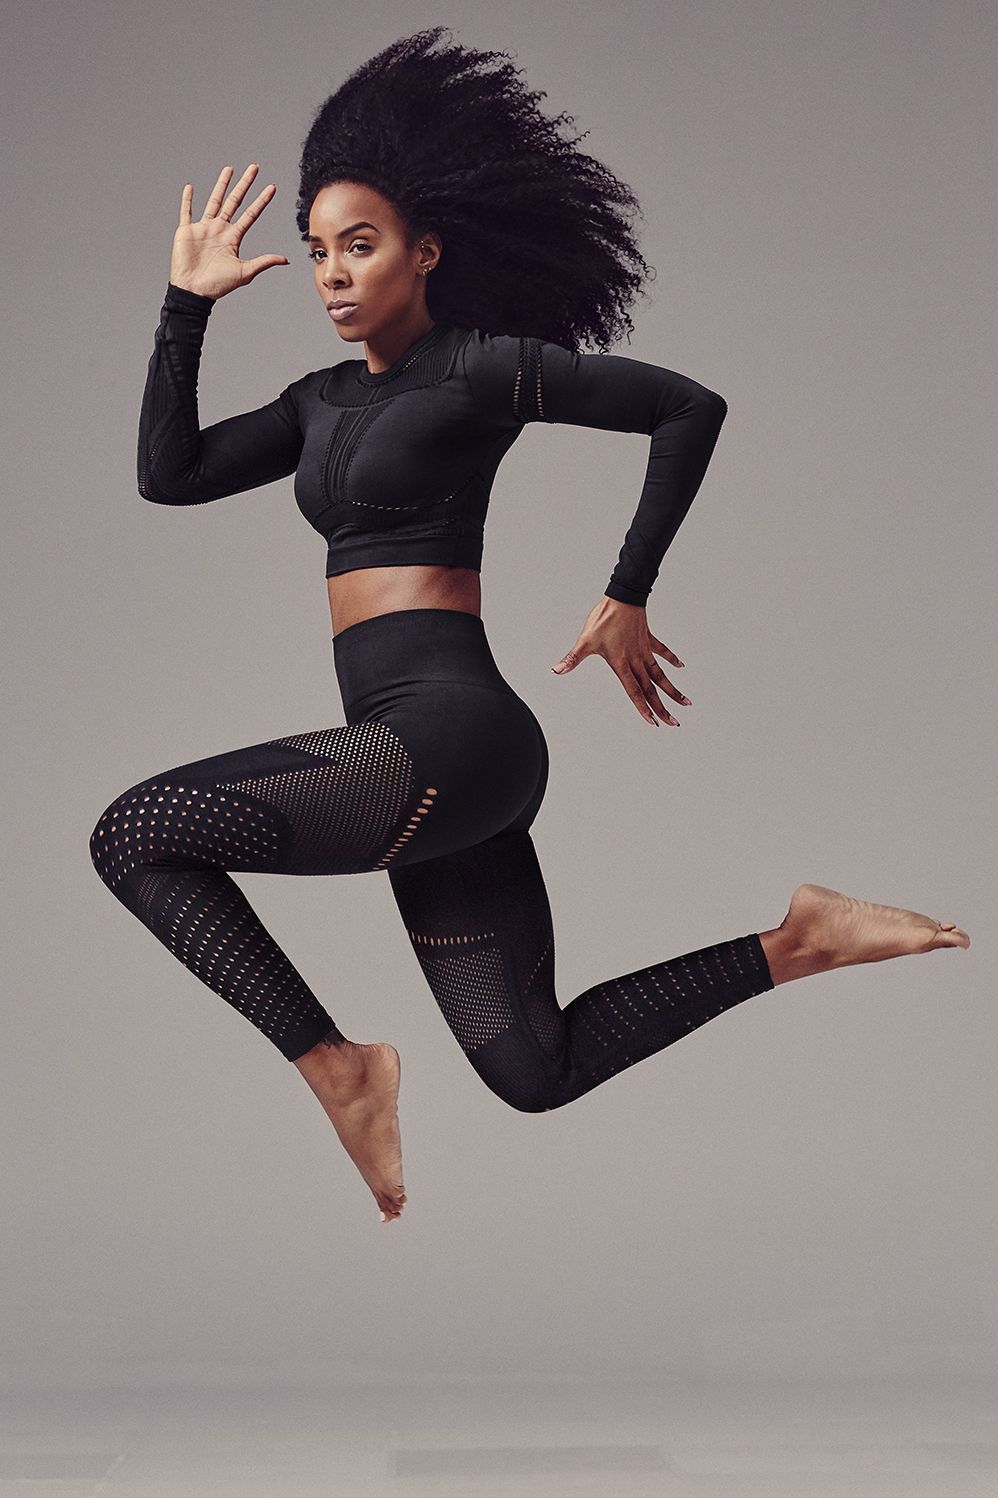 Fierce 2-Piece Outfit - Fierce 2-Piece Outfit -   24 fitness Transformation black women ideas